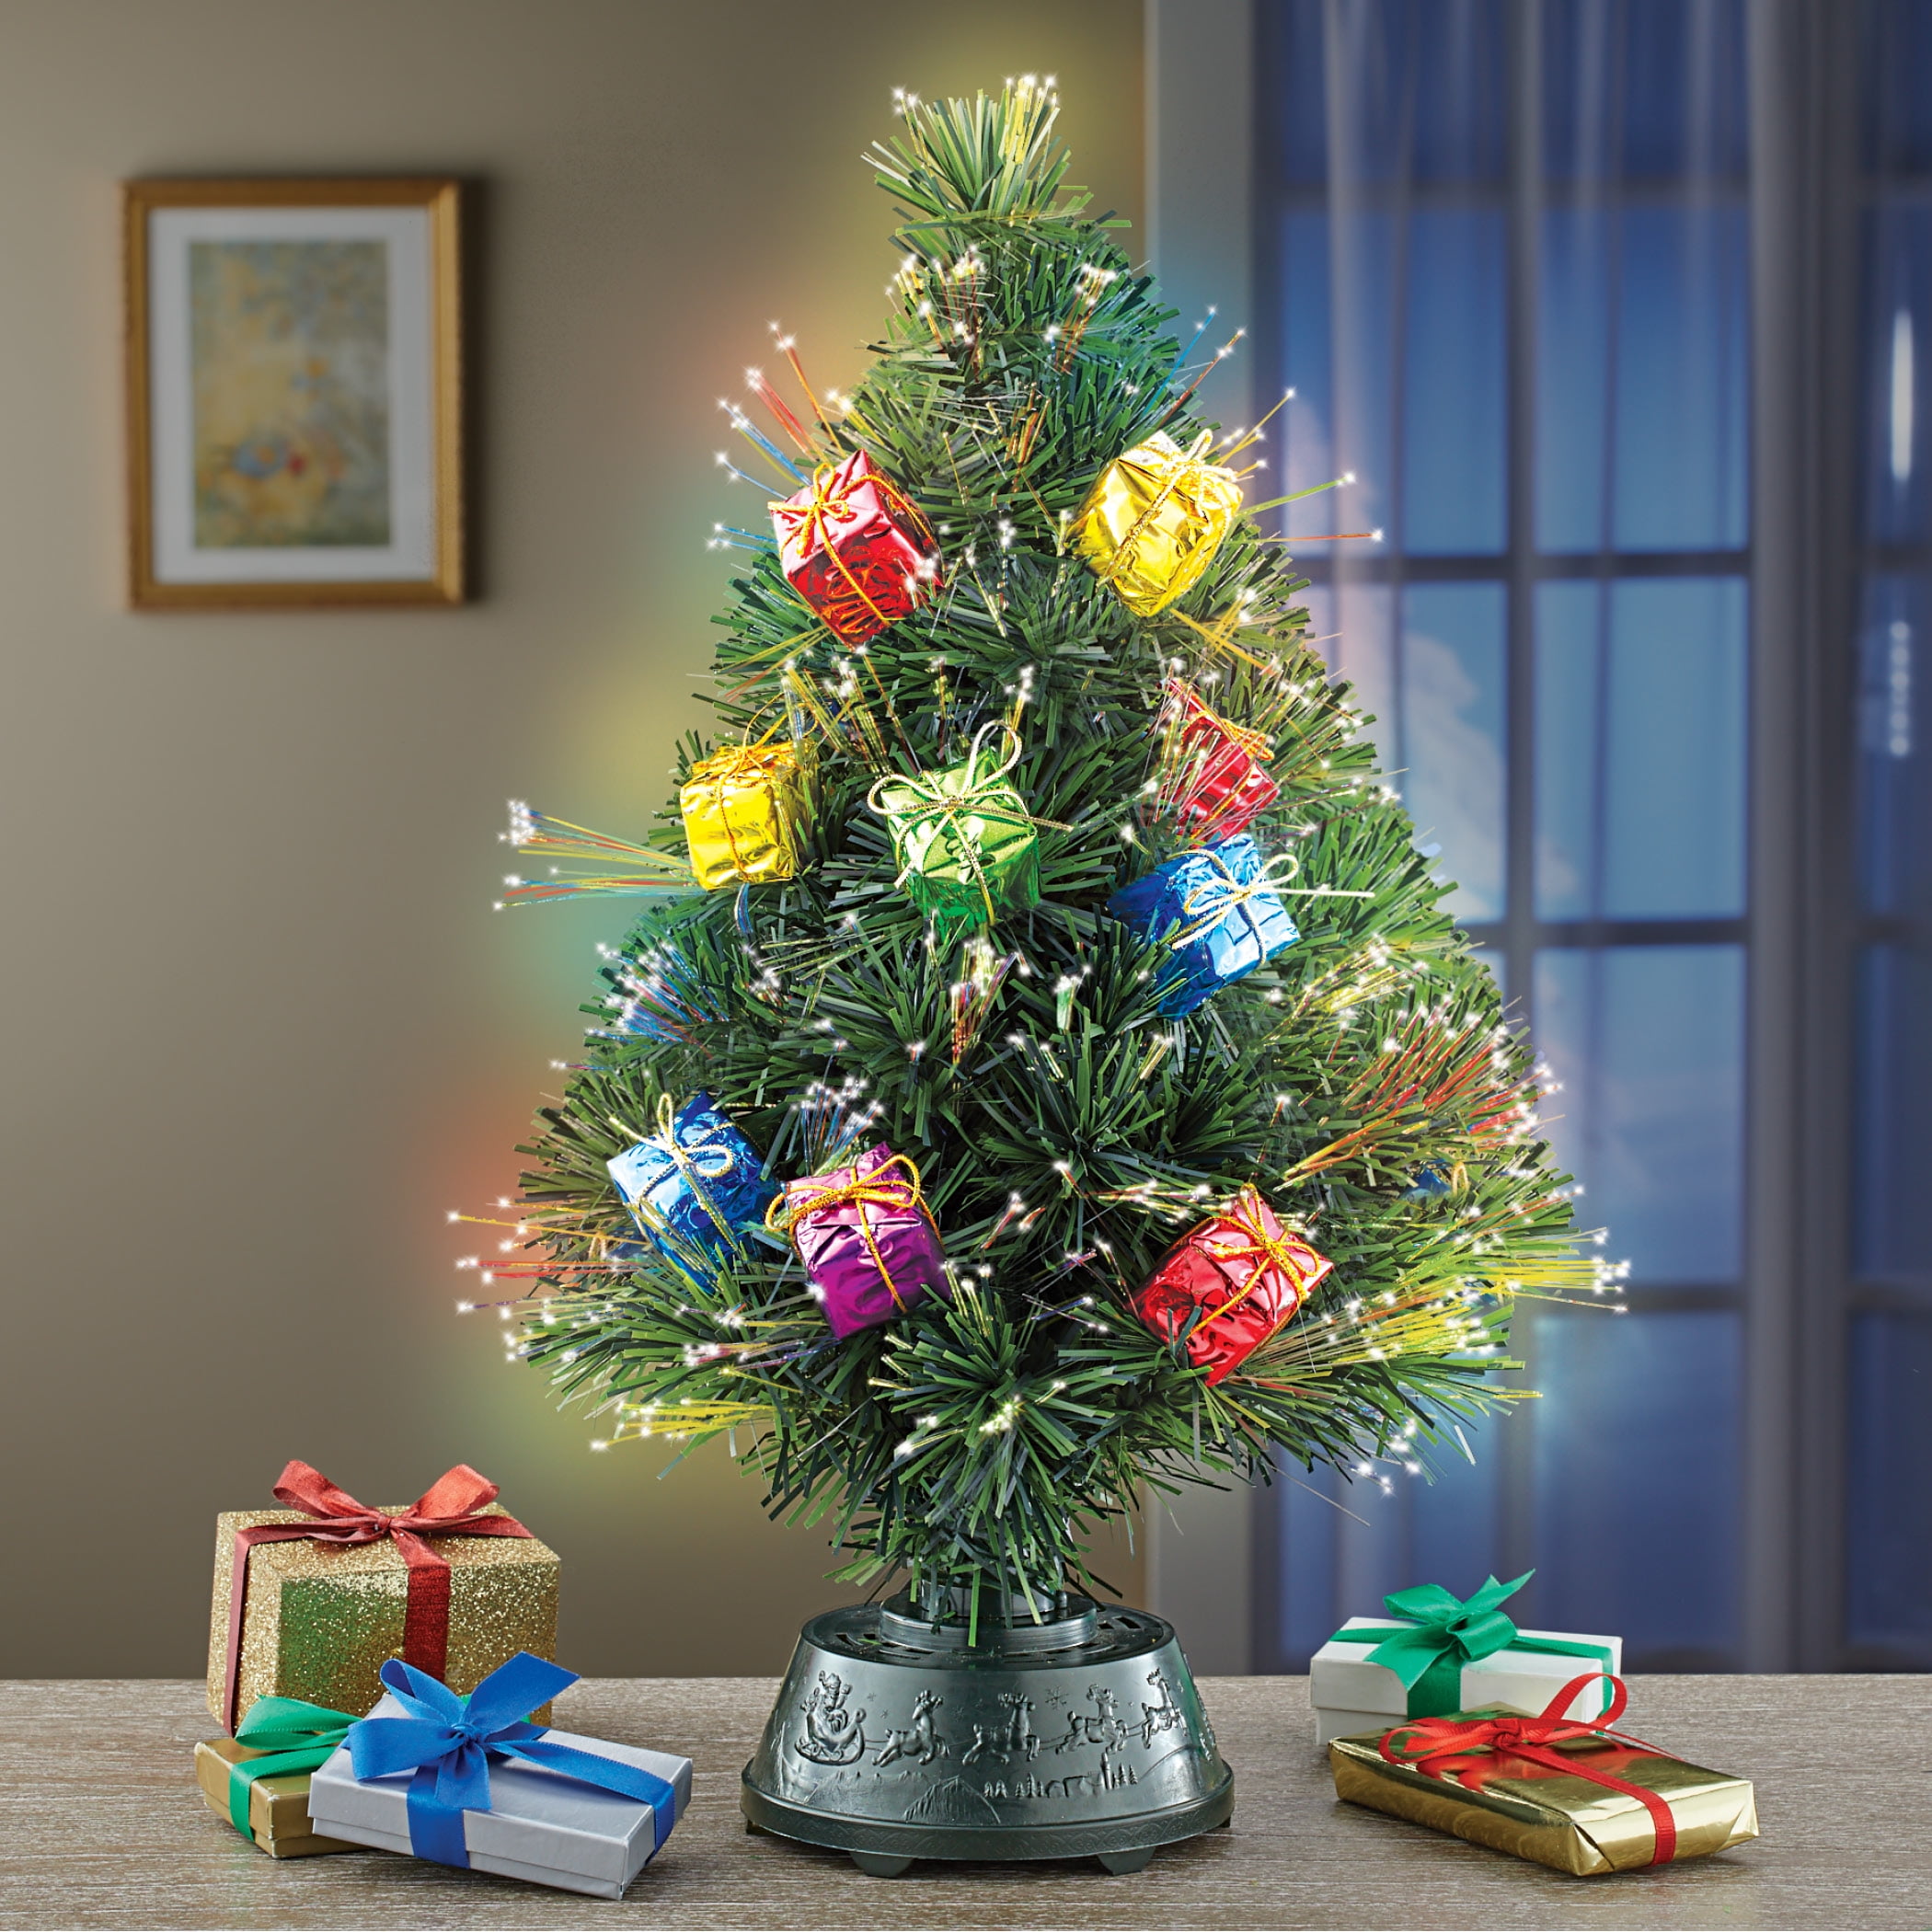 Rotating Tabletop Christmas Tree with Fiber Optic Lights, Gift Ornaments - Walmart.com - Walmart.com